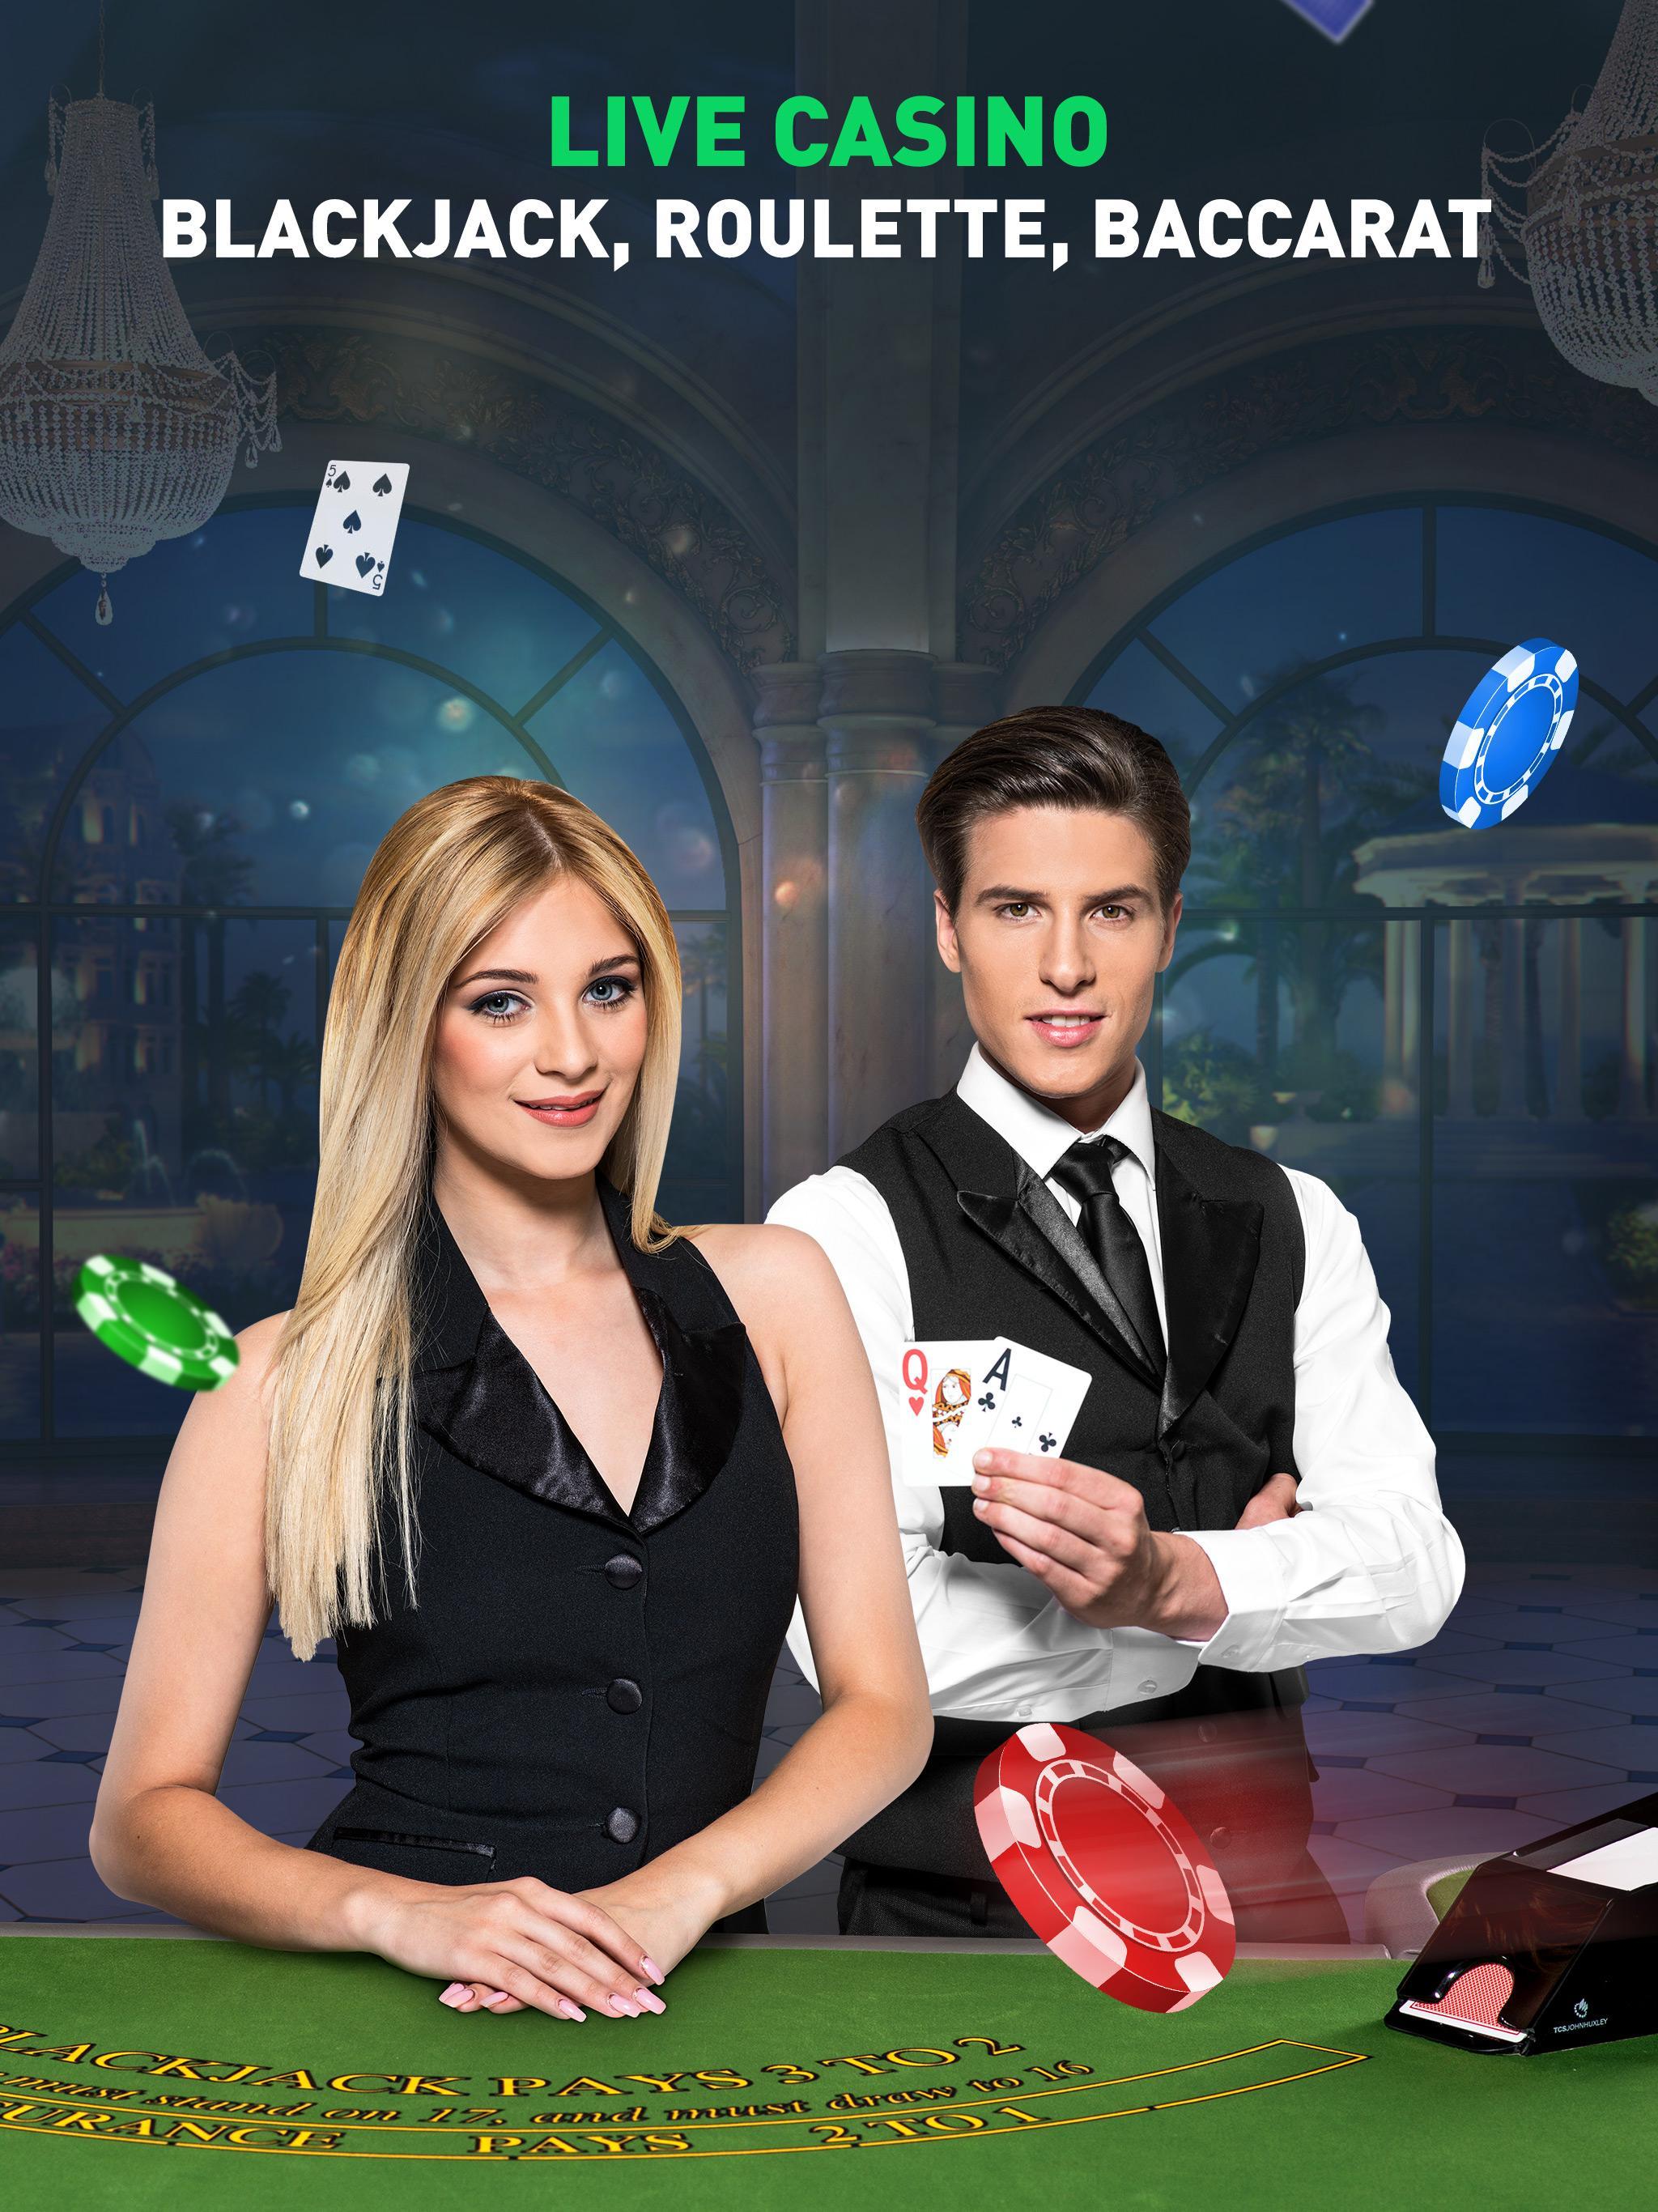 The Online Casino Best Casino App 5 Bonus For Android Apk Download